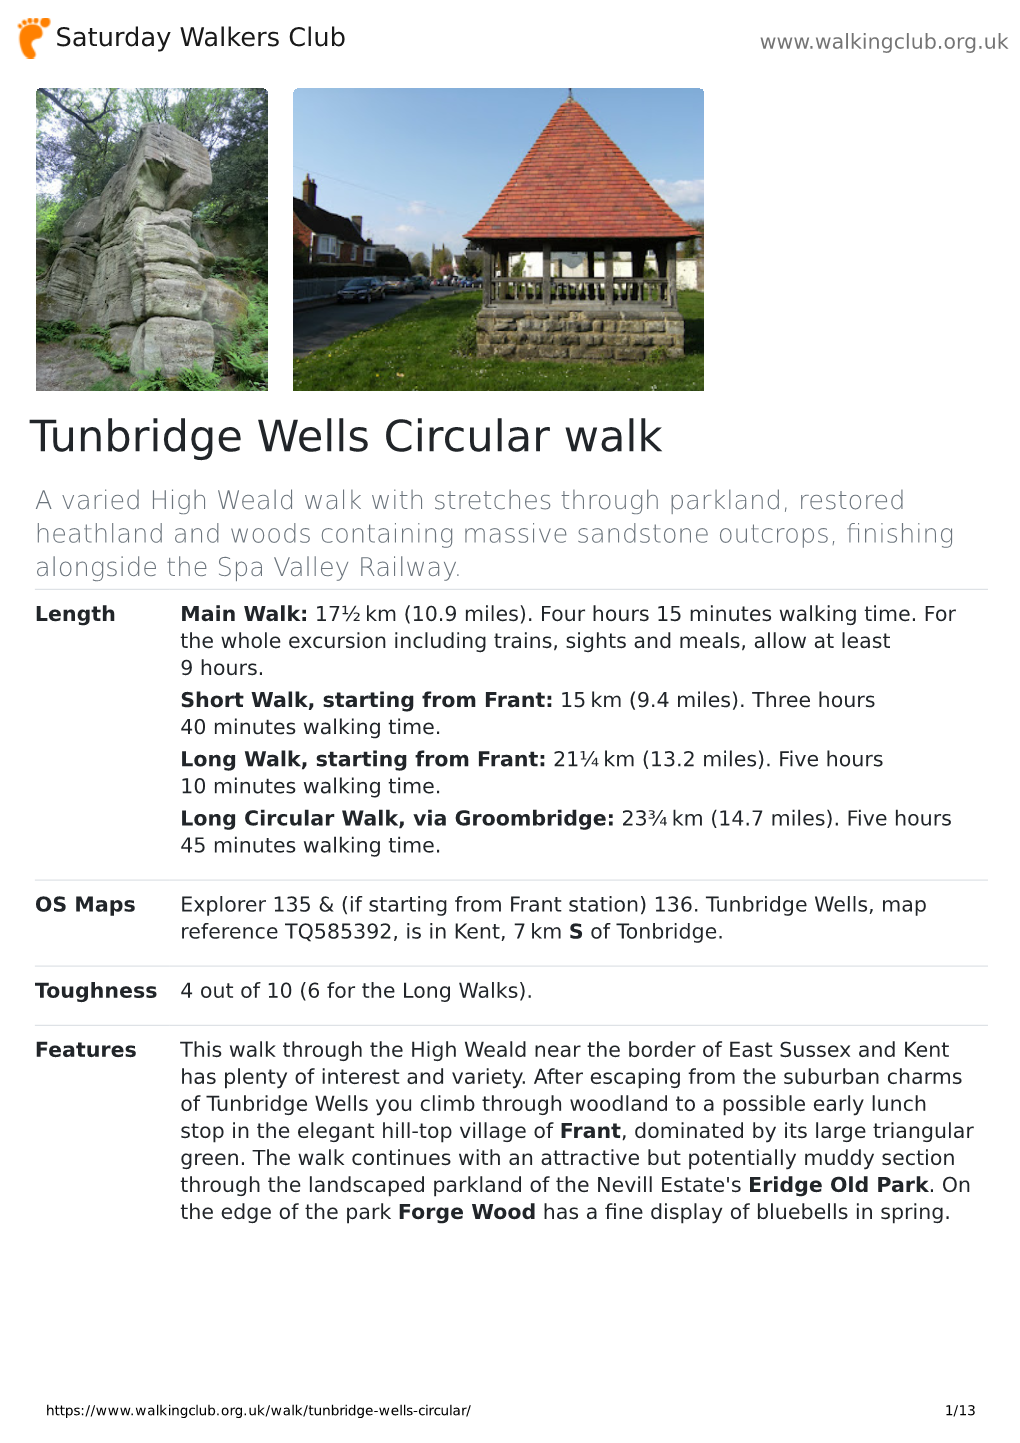 Tunbridge Wells Circular Walk